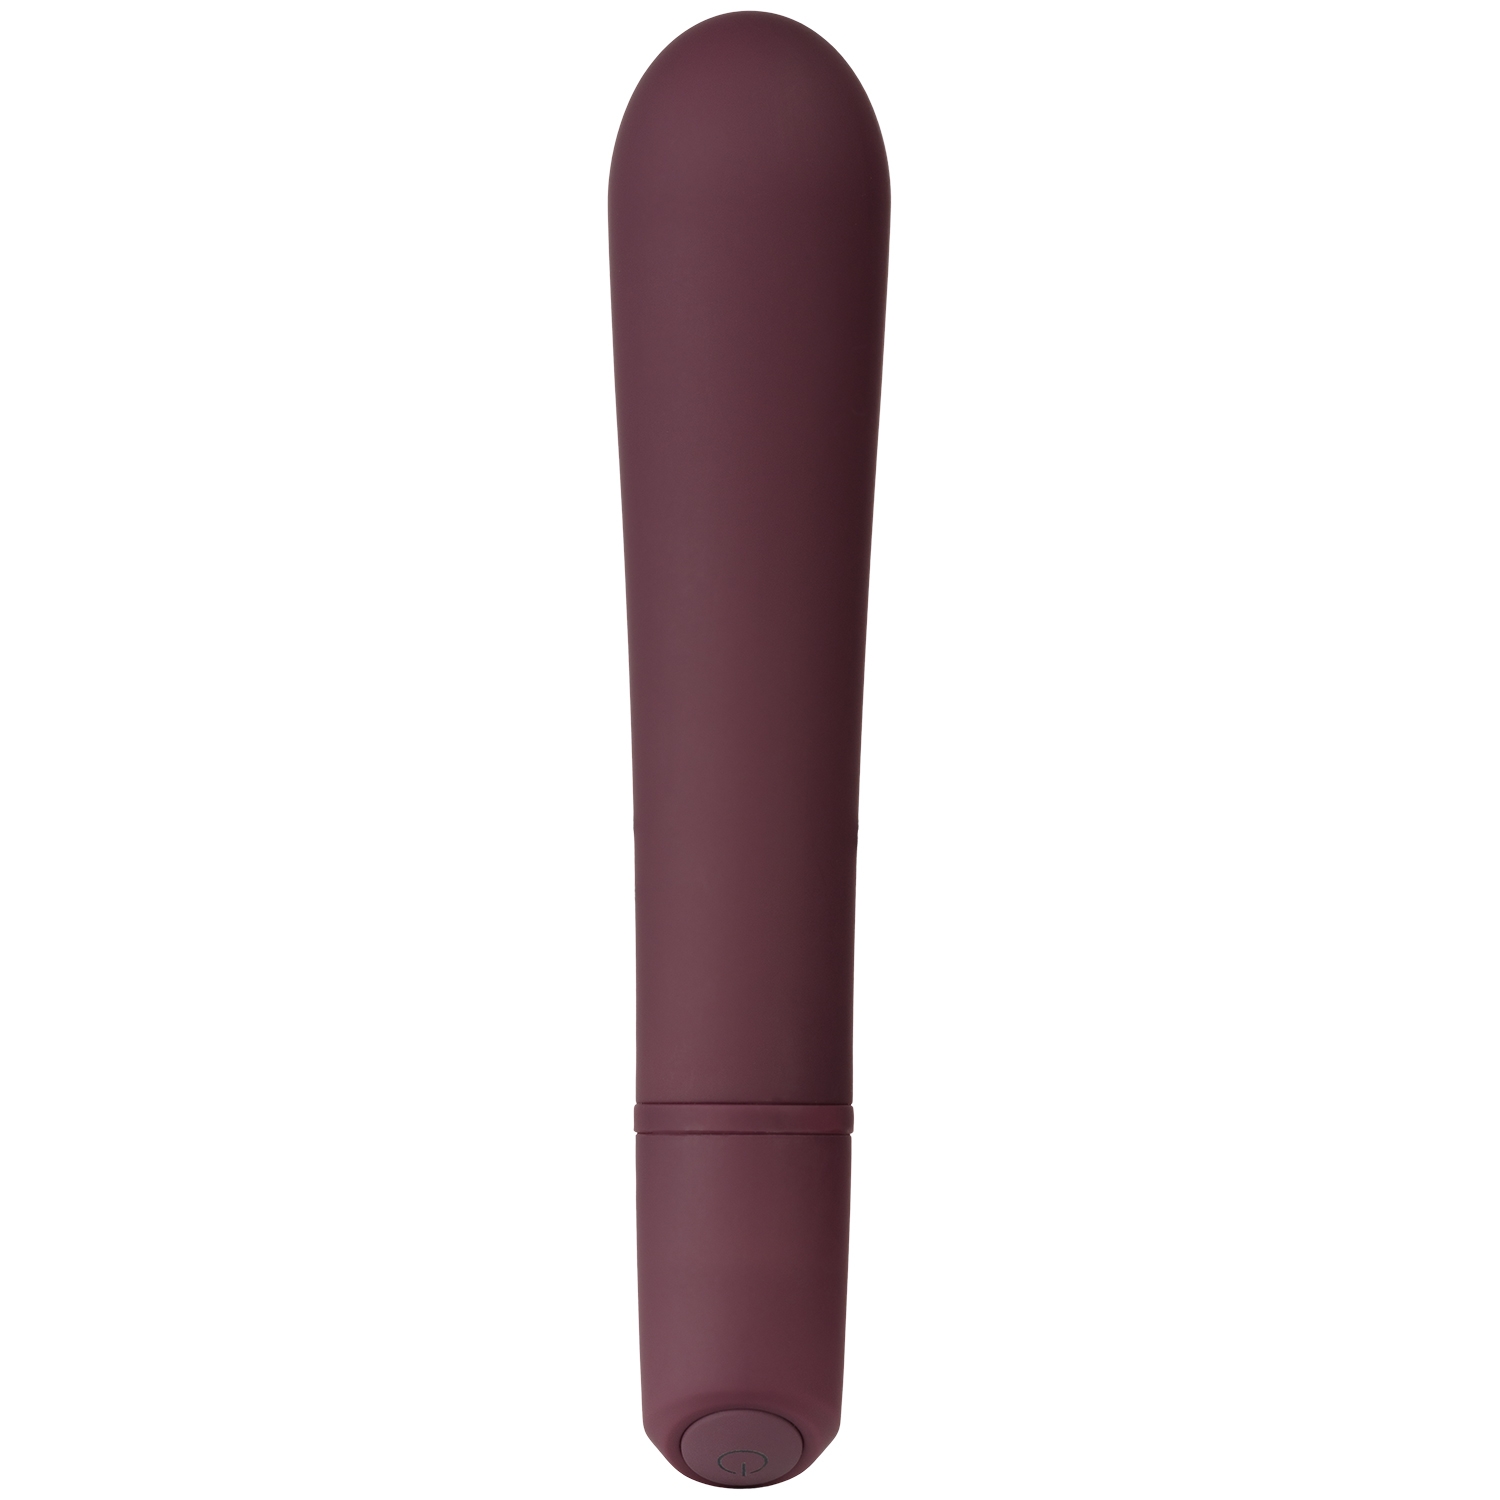 Amaysin Pleasure Wand Vibrator - Bordeaux | Vibratorer//Favoriter//Kvinnor//Vibrerande Dildo//Dildos//Dildovibrator//Amaysin//Färgade Dildos | Intimast